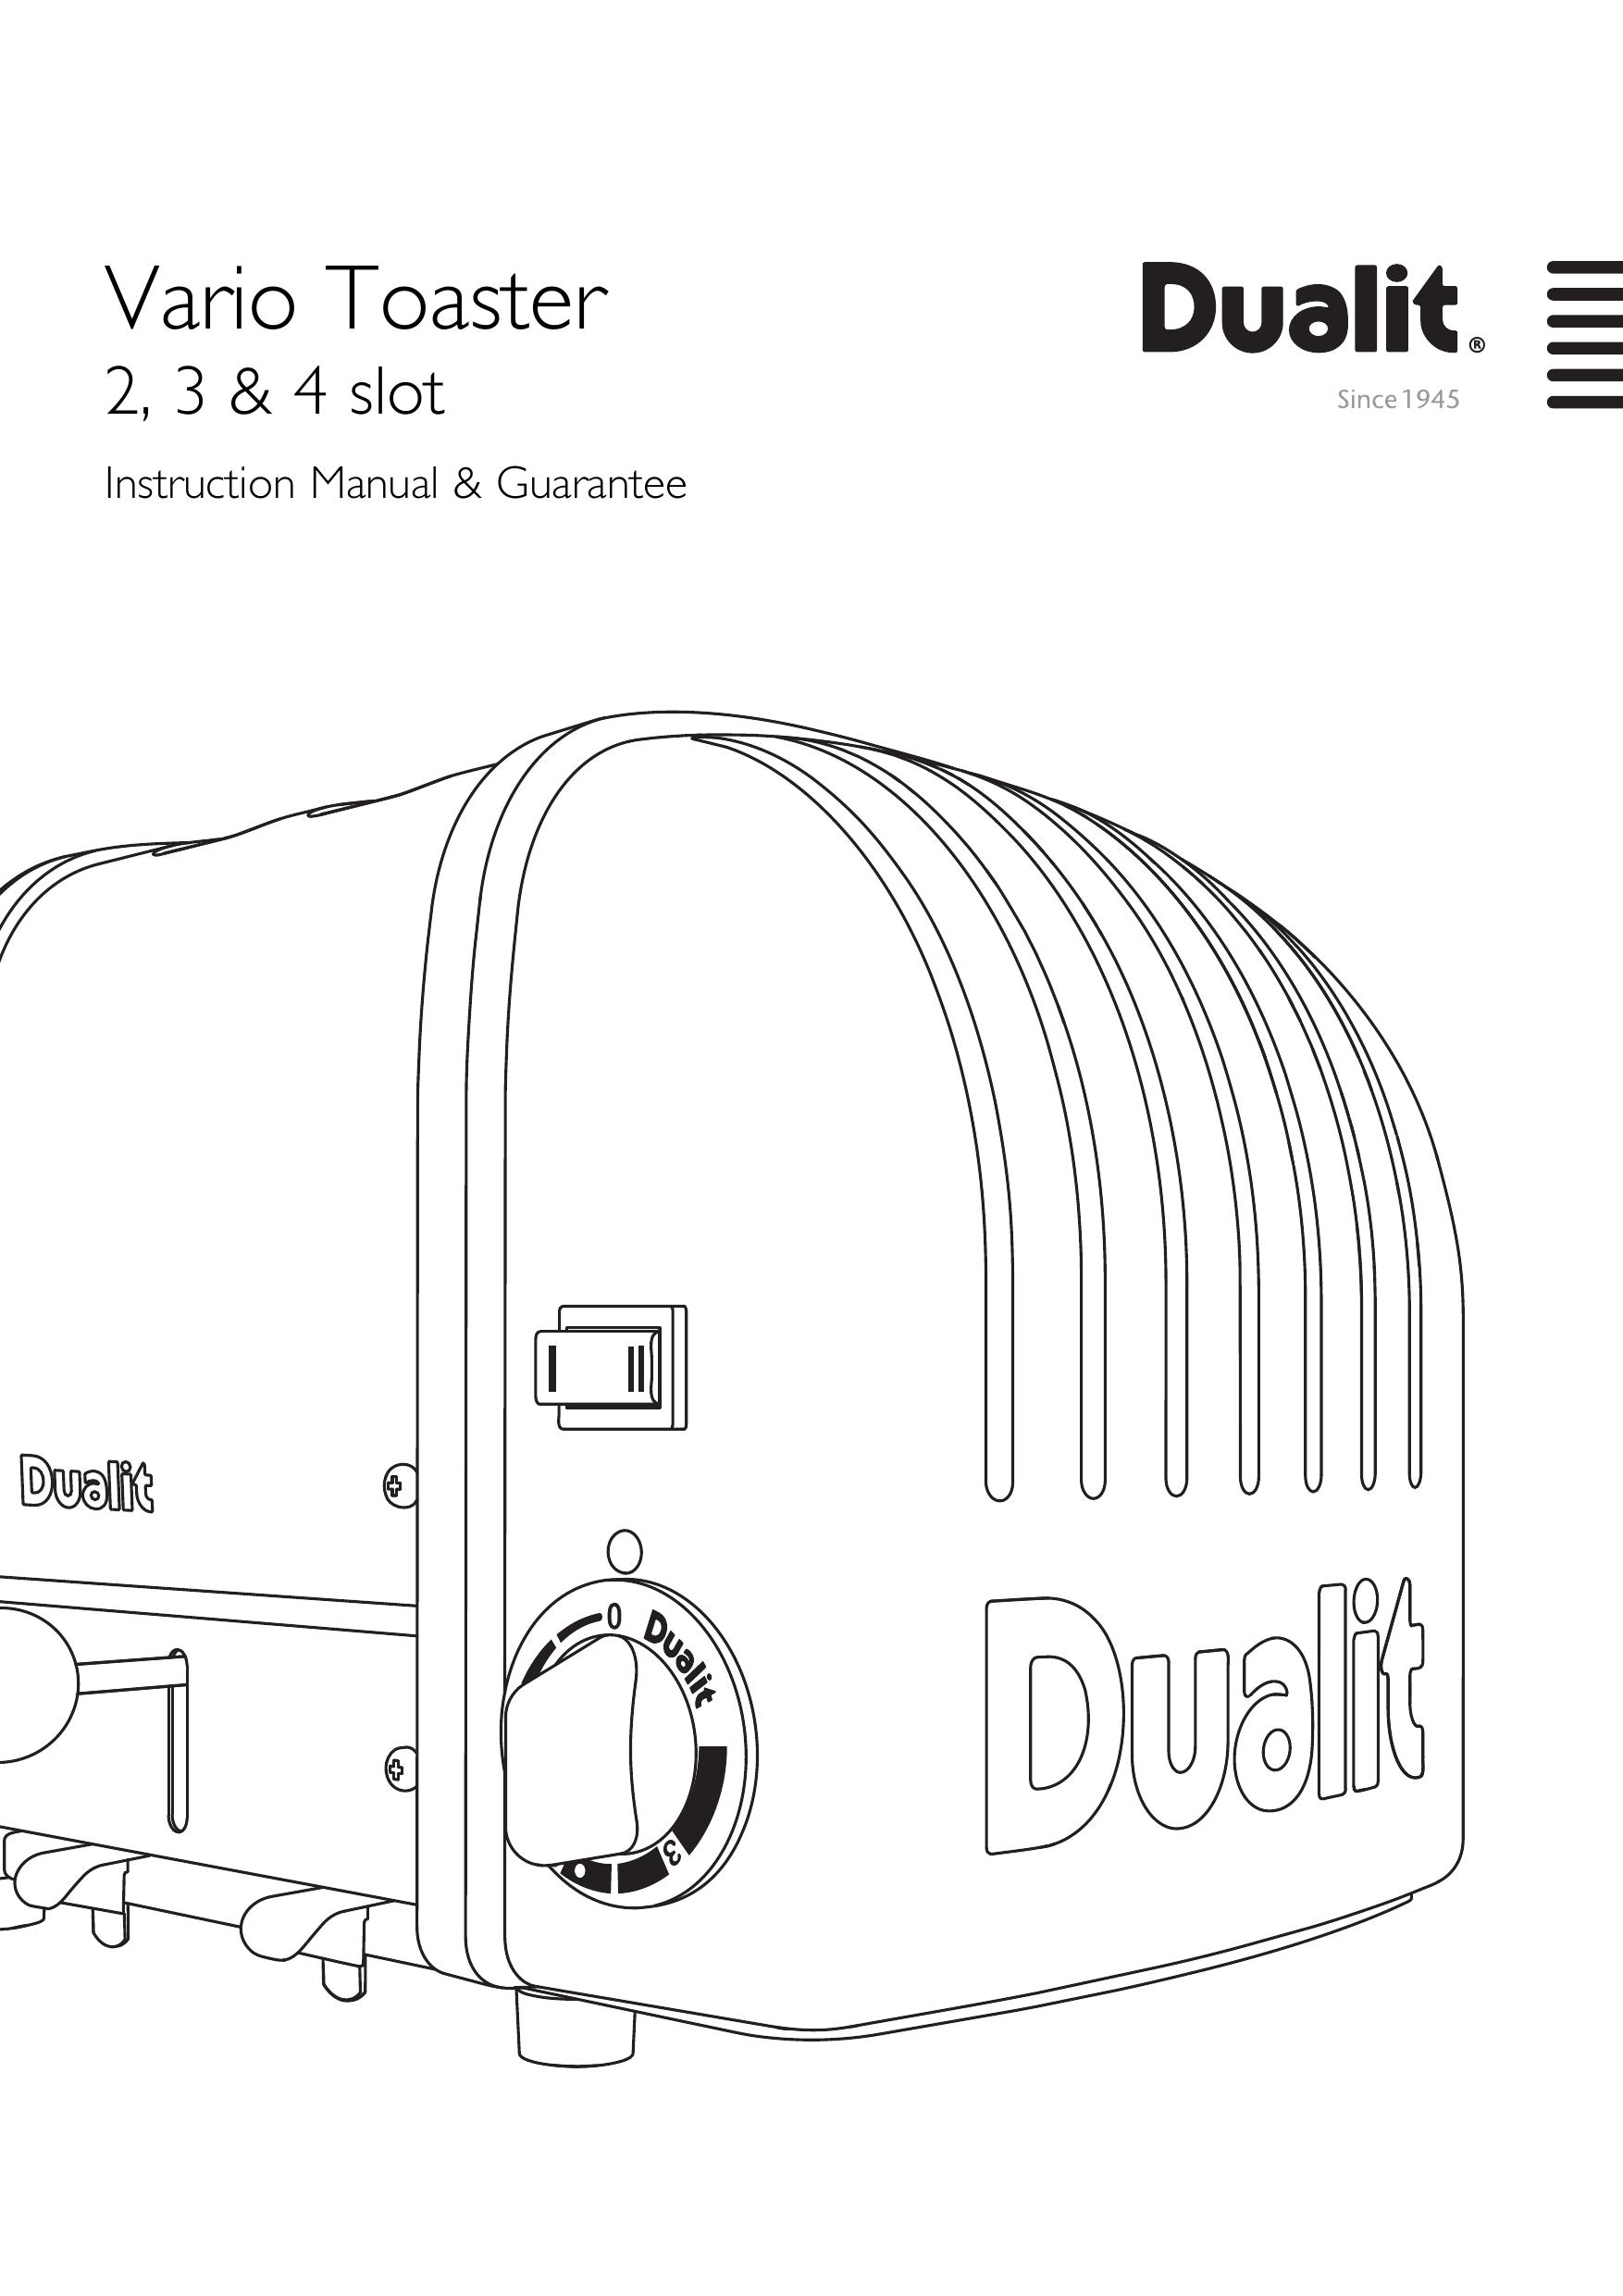 Dualit 20297 Toaster User Manual